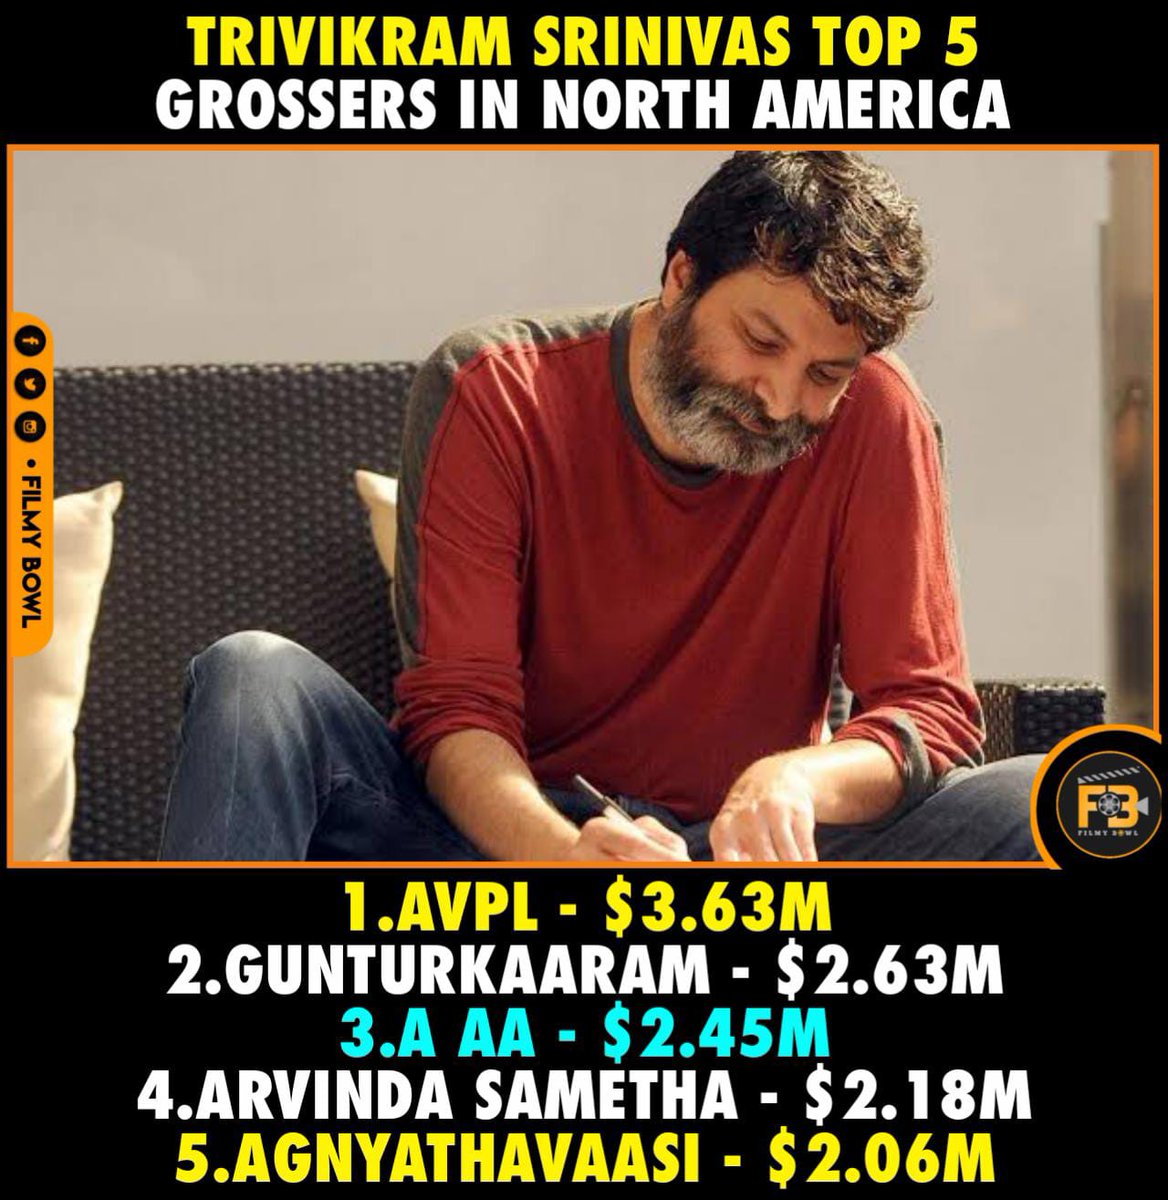 #TrivikramSrinivas top 5 grossers in North American 

#AlaVaikunthapurramuloo 
#GunturKaaram 
#AAa 
#AravindaSametha 
#Agnyathavaasi